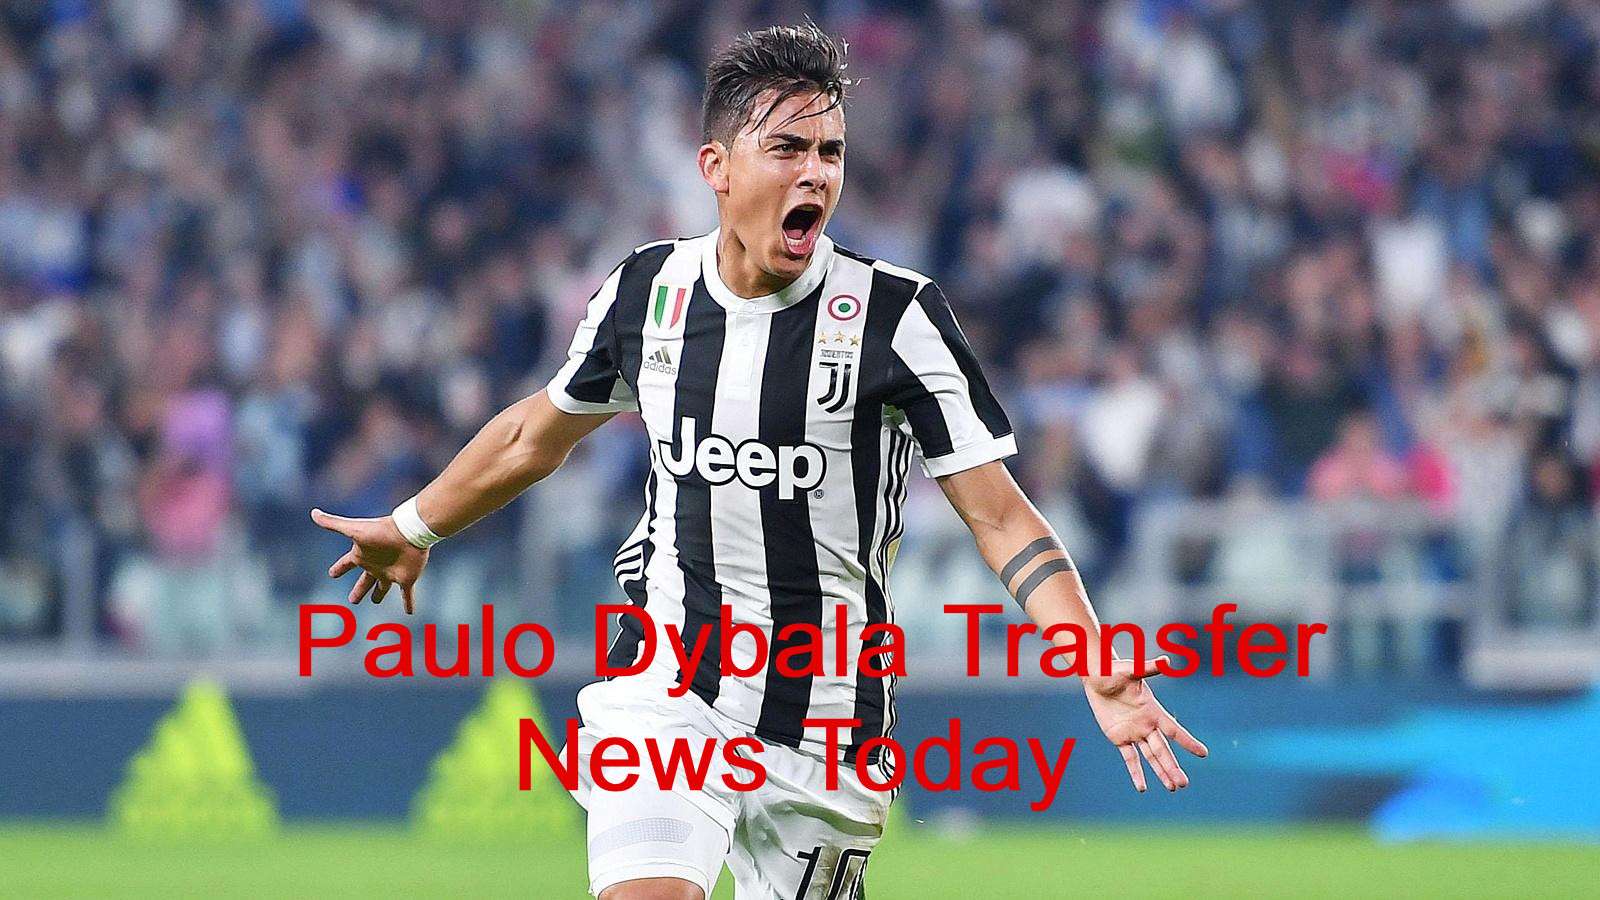 Paulo Dybala Transfer News Today